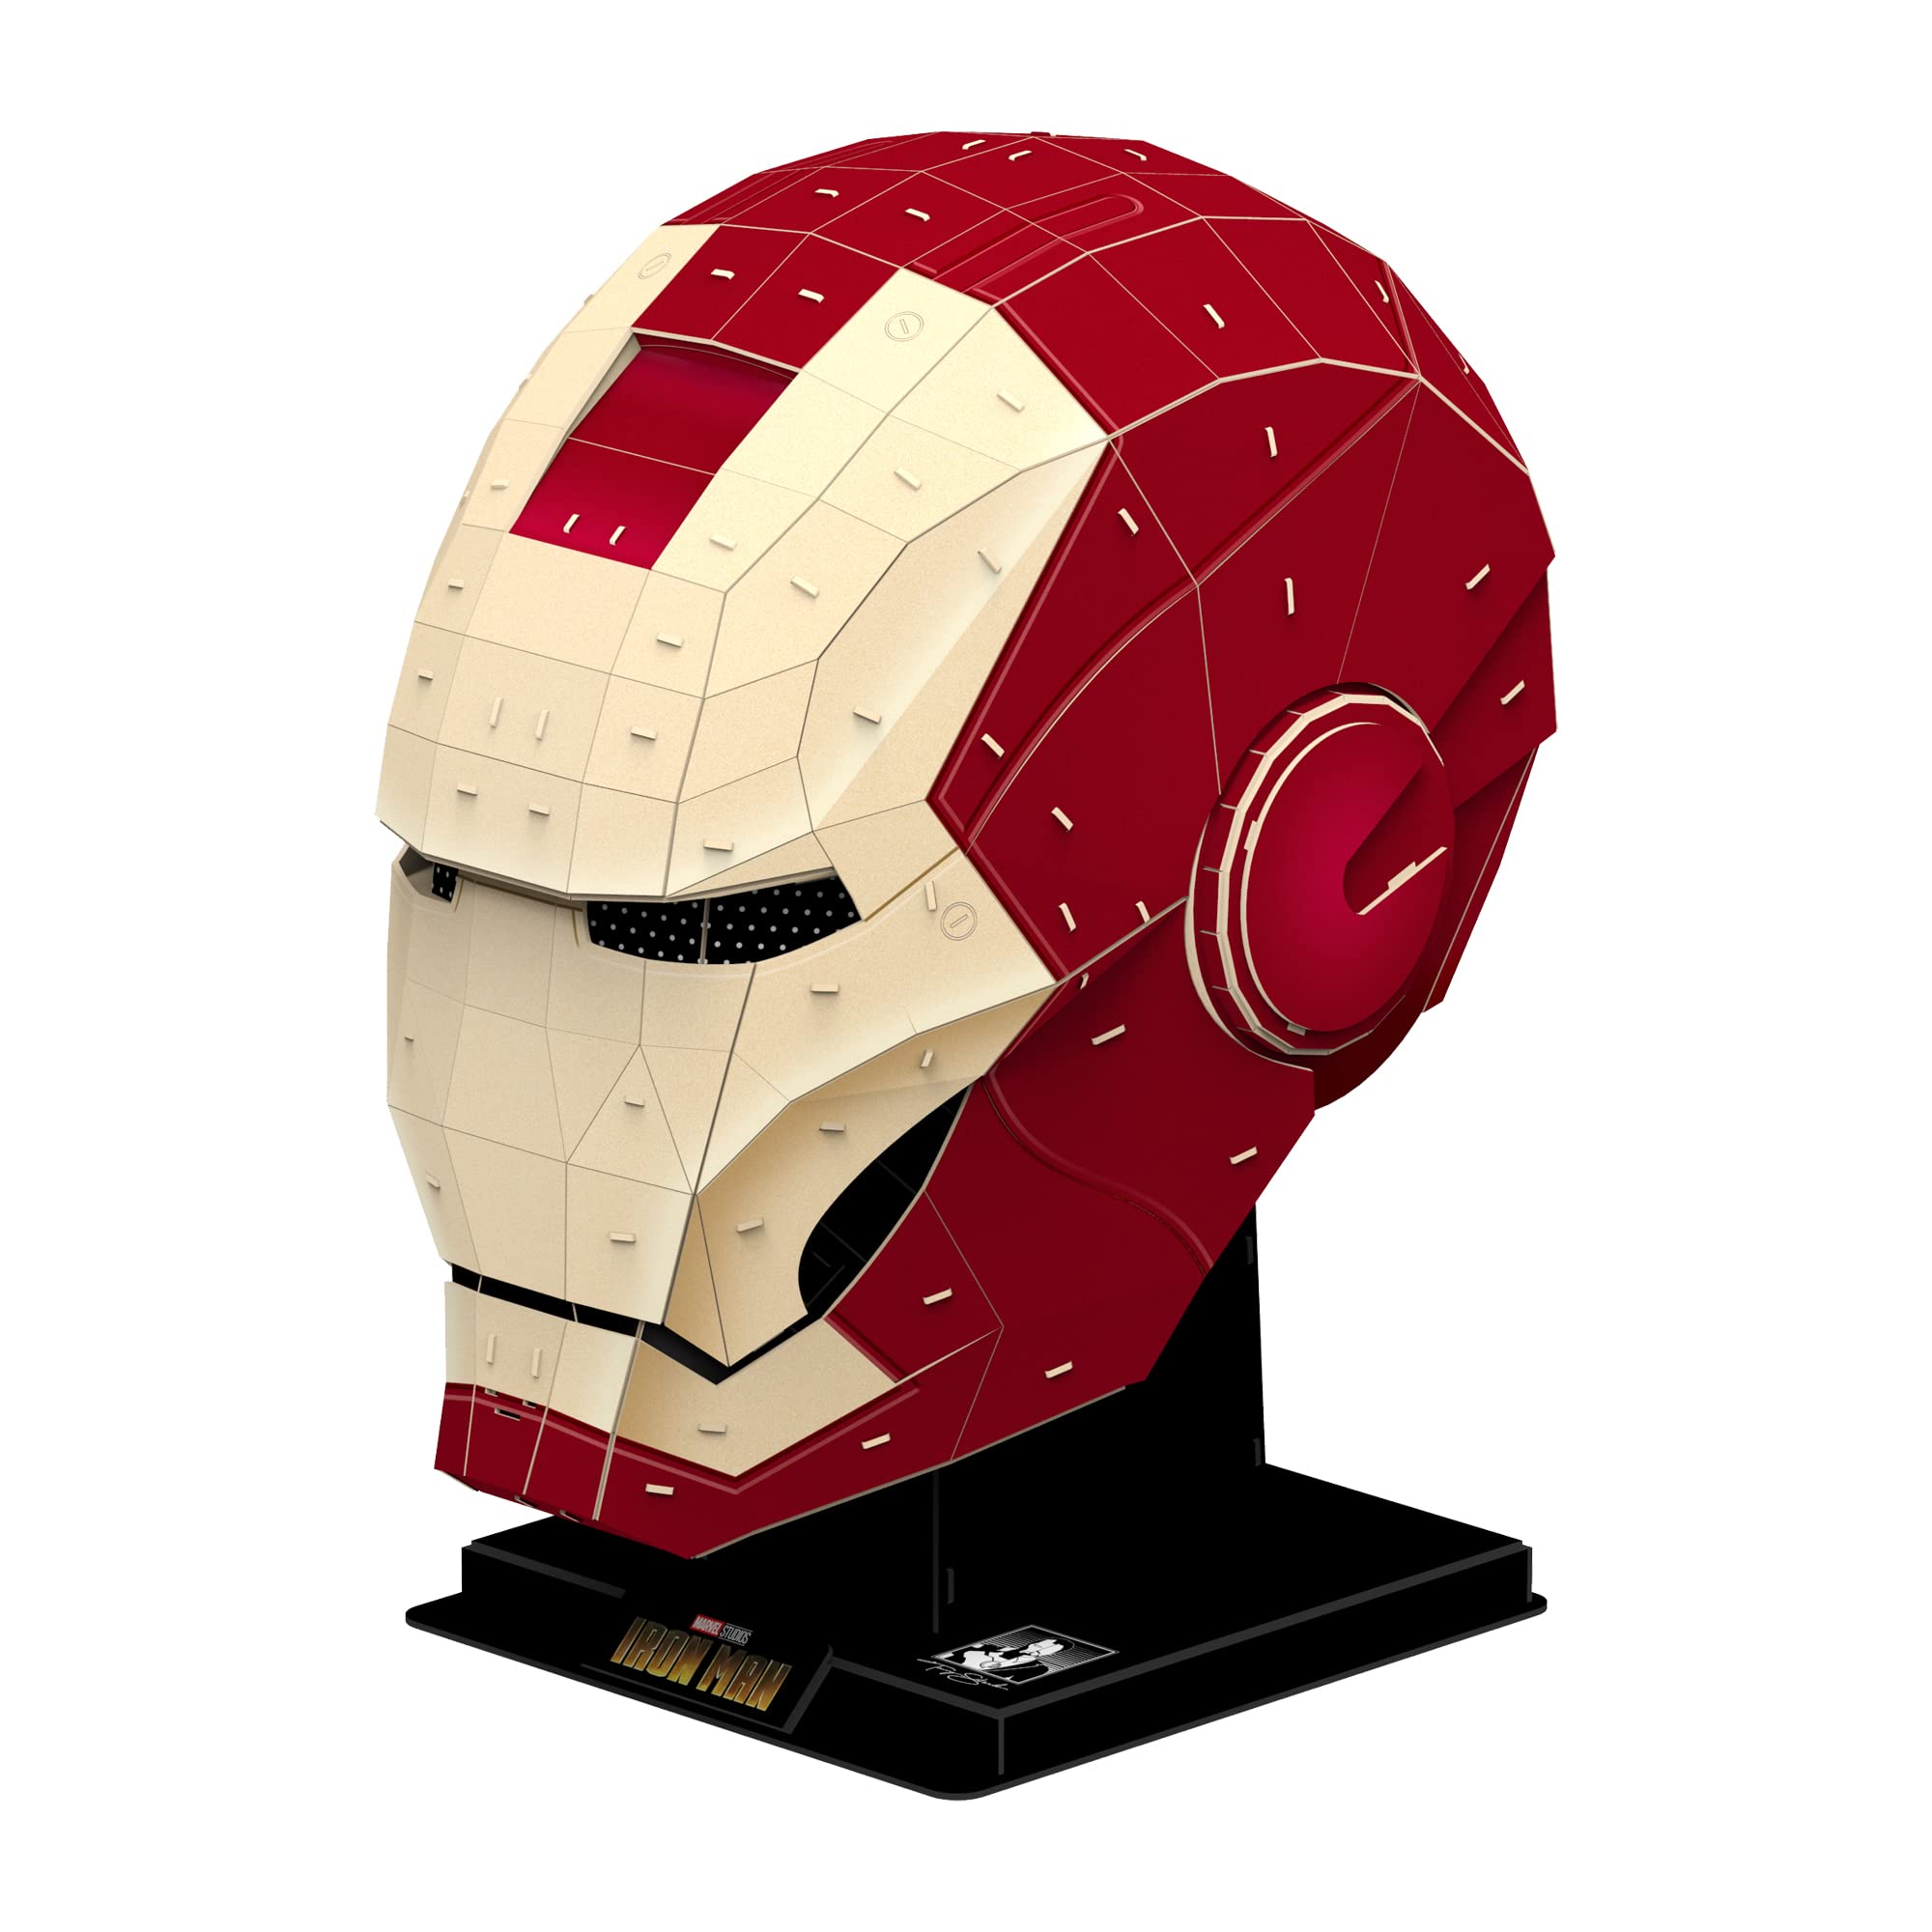 University Games Marvel Studios: Iron Man Helmet 3D Model Puzzle